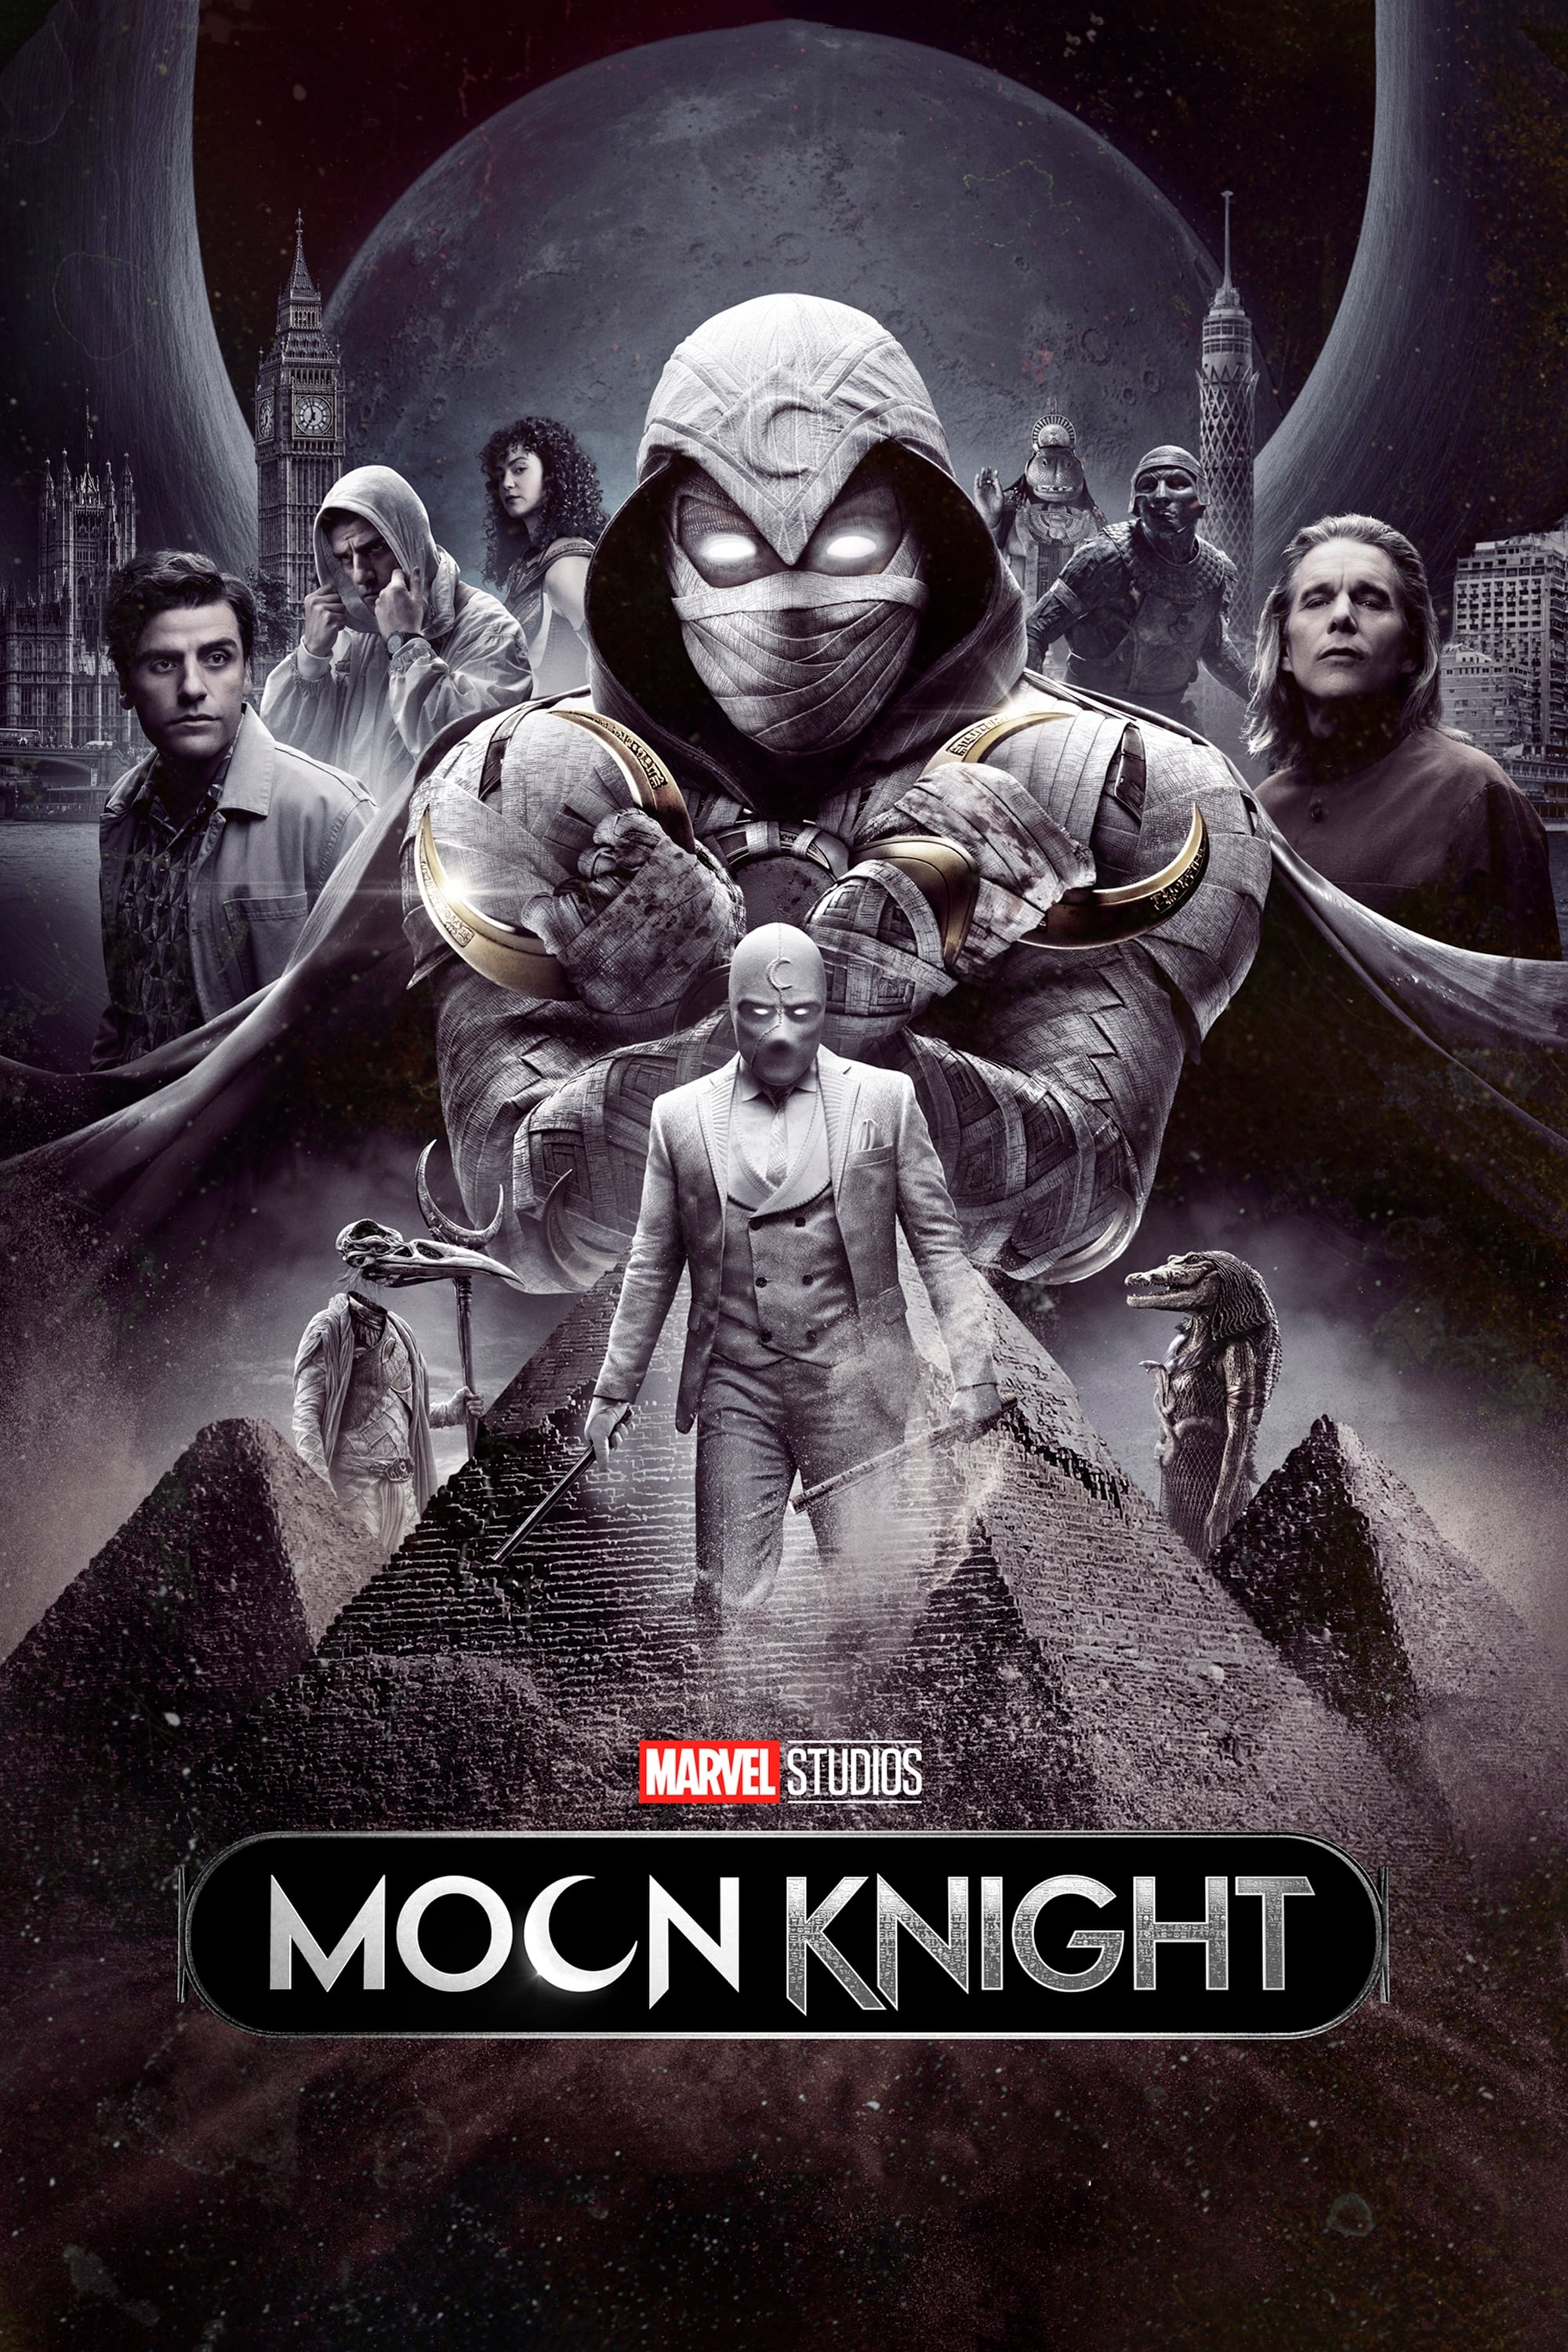 Moon Knight TV Shows About Mythology